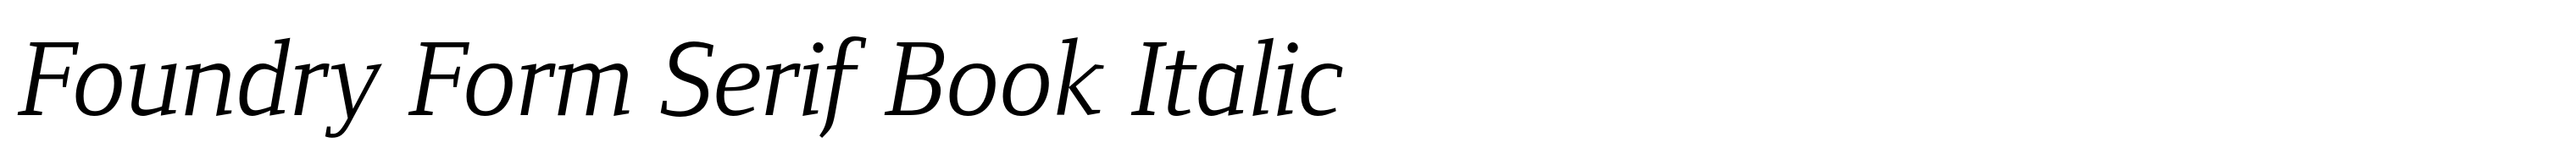 Foundry Form Serif Book Italic